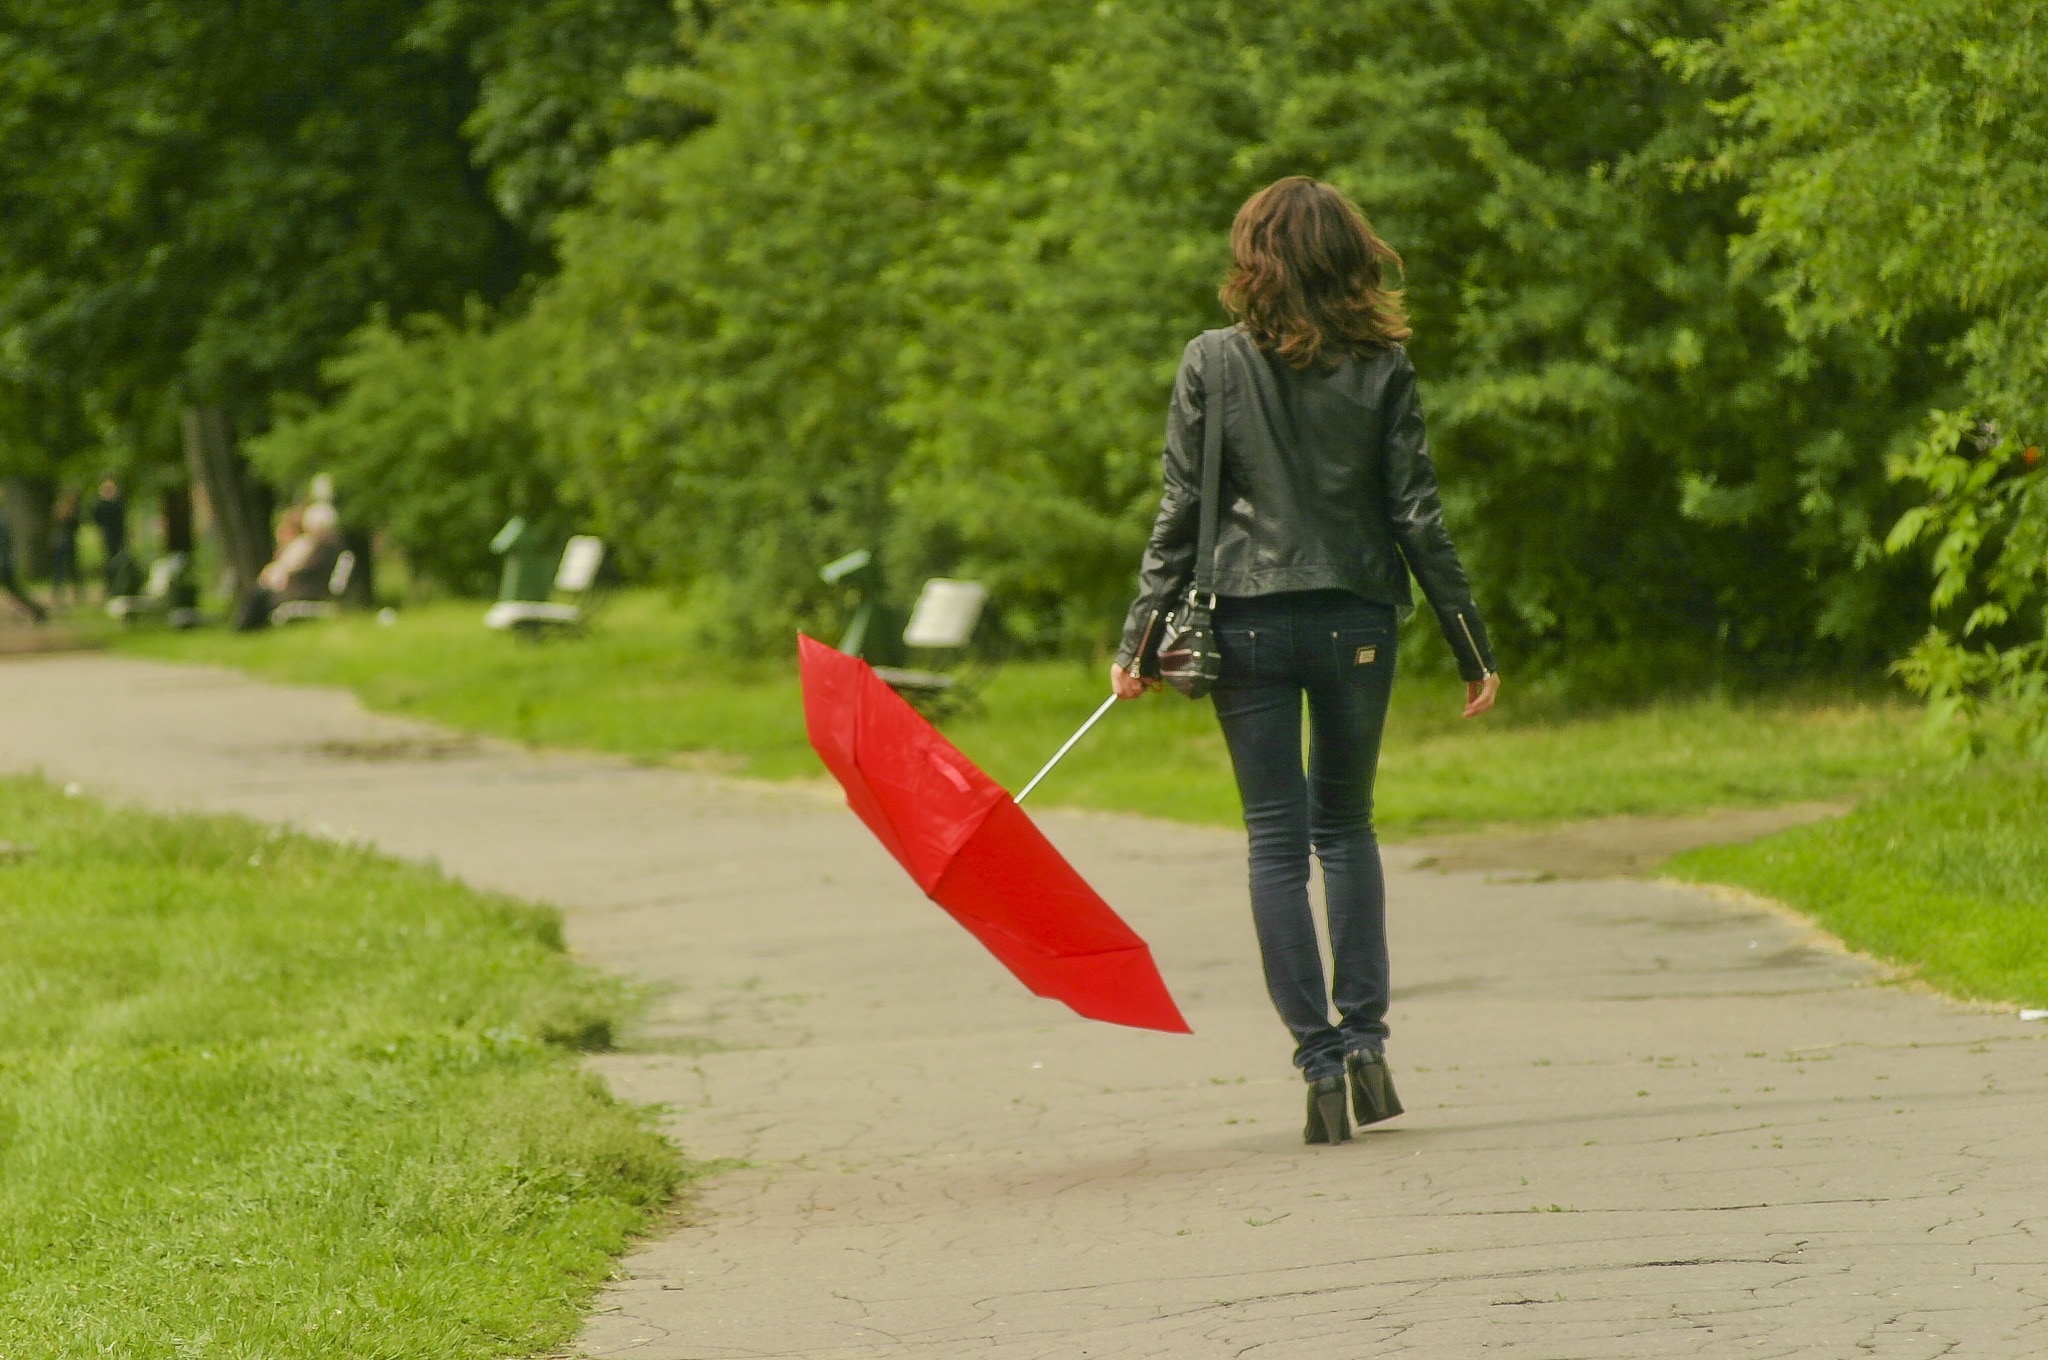 Greens, Umbrella, Girl, Photoshoot, Park, walking, one person